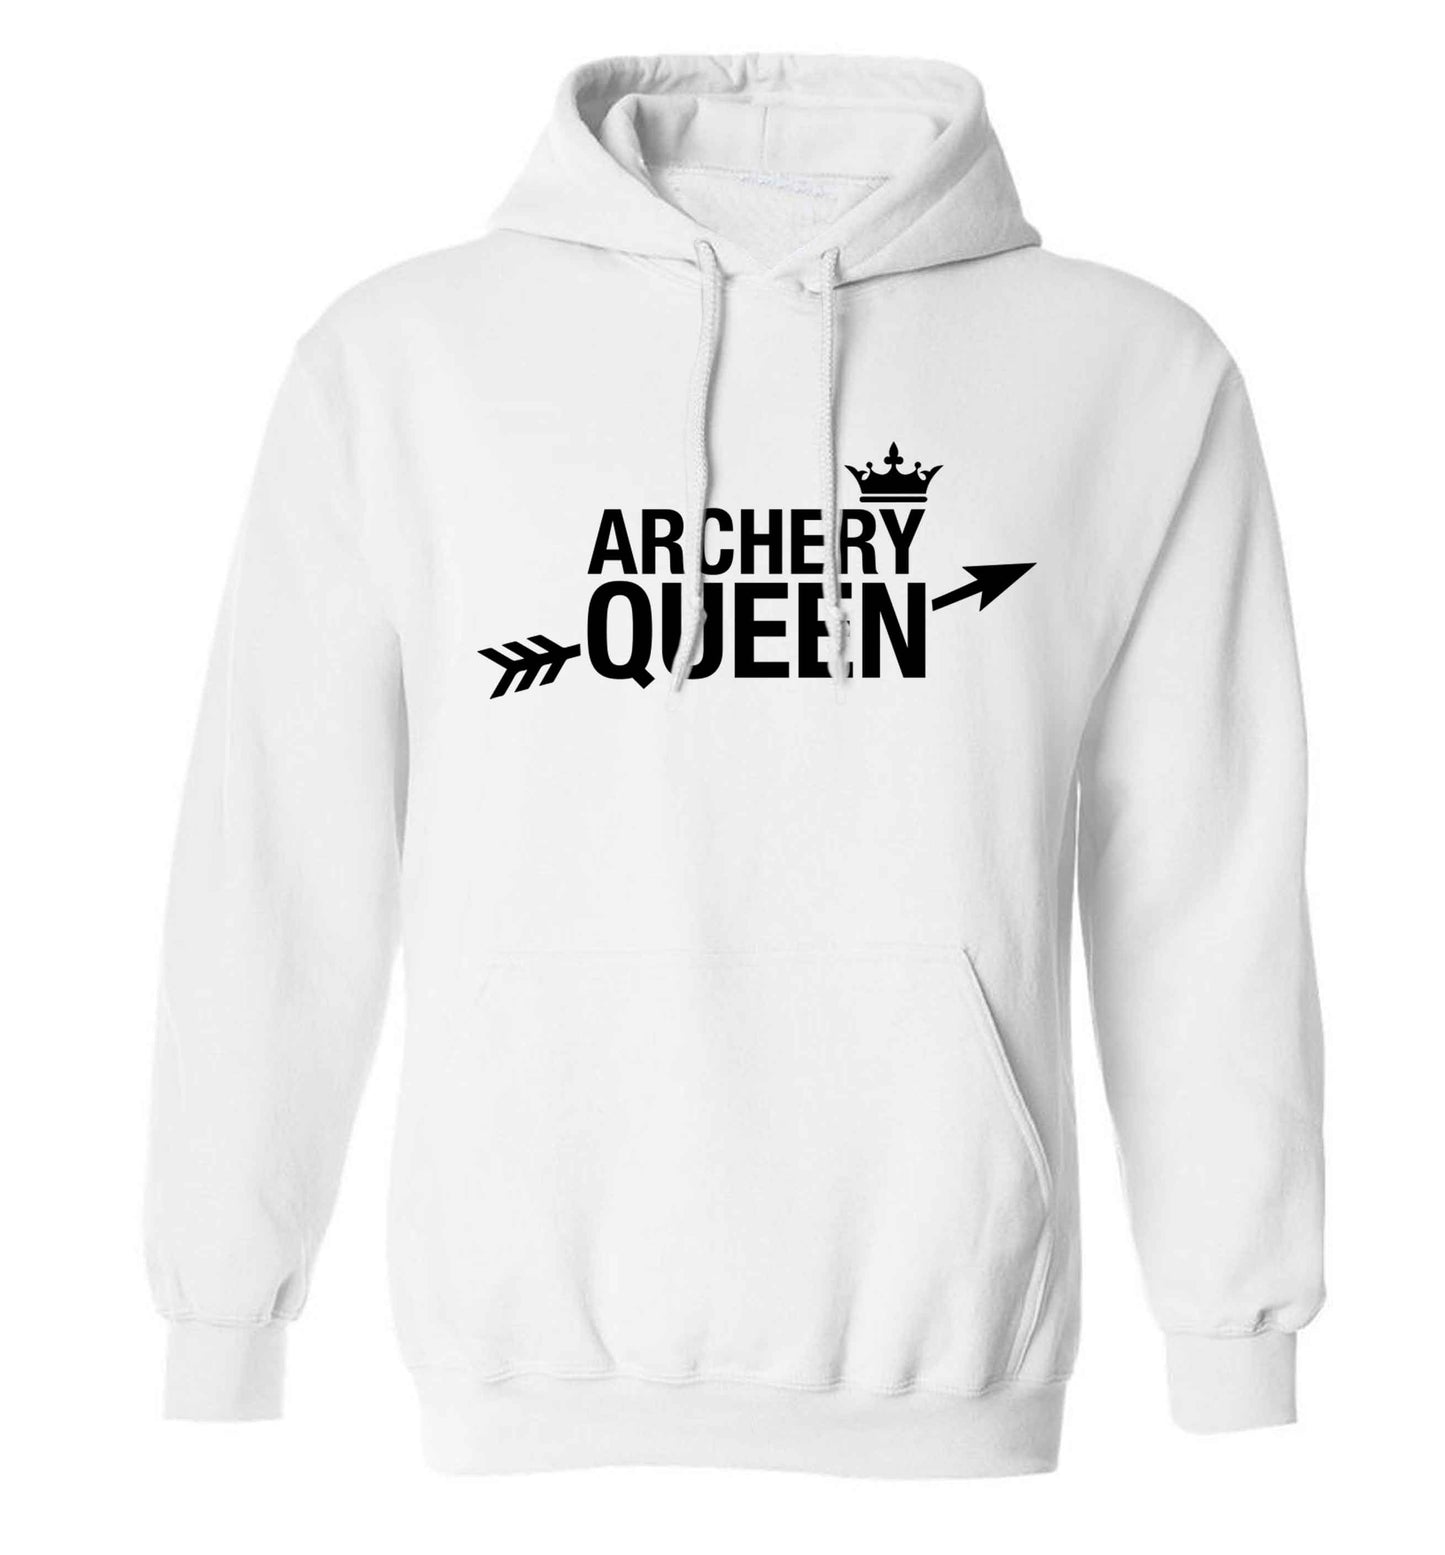 Archery queen adults unisex white hoodie 2XL